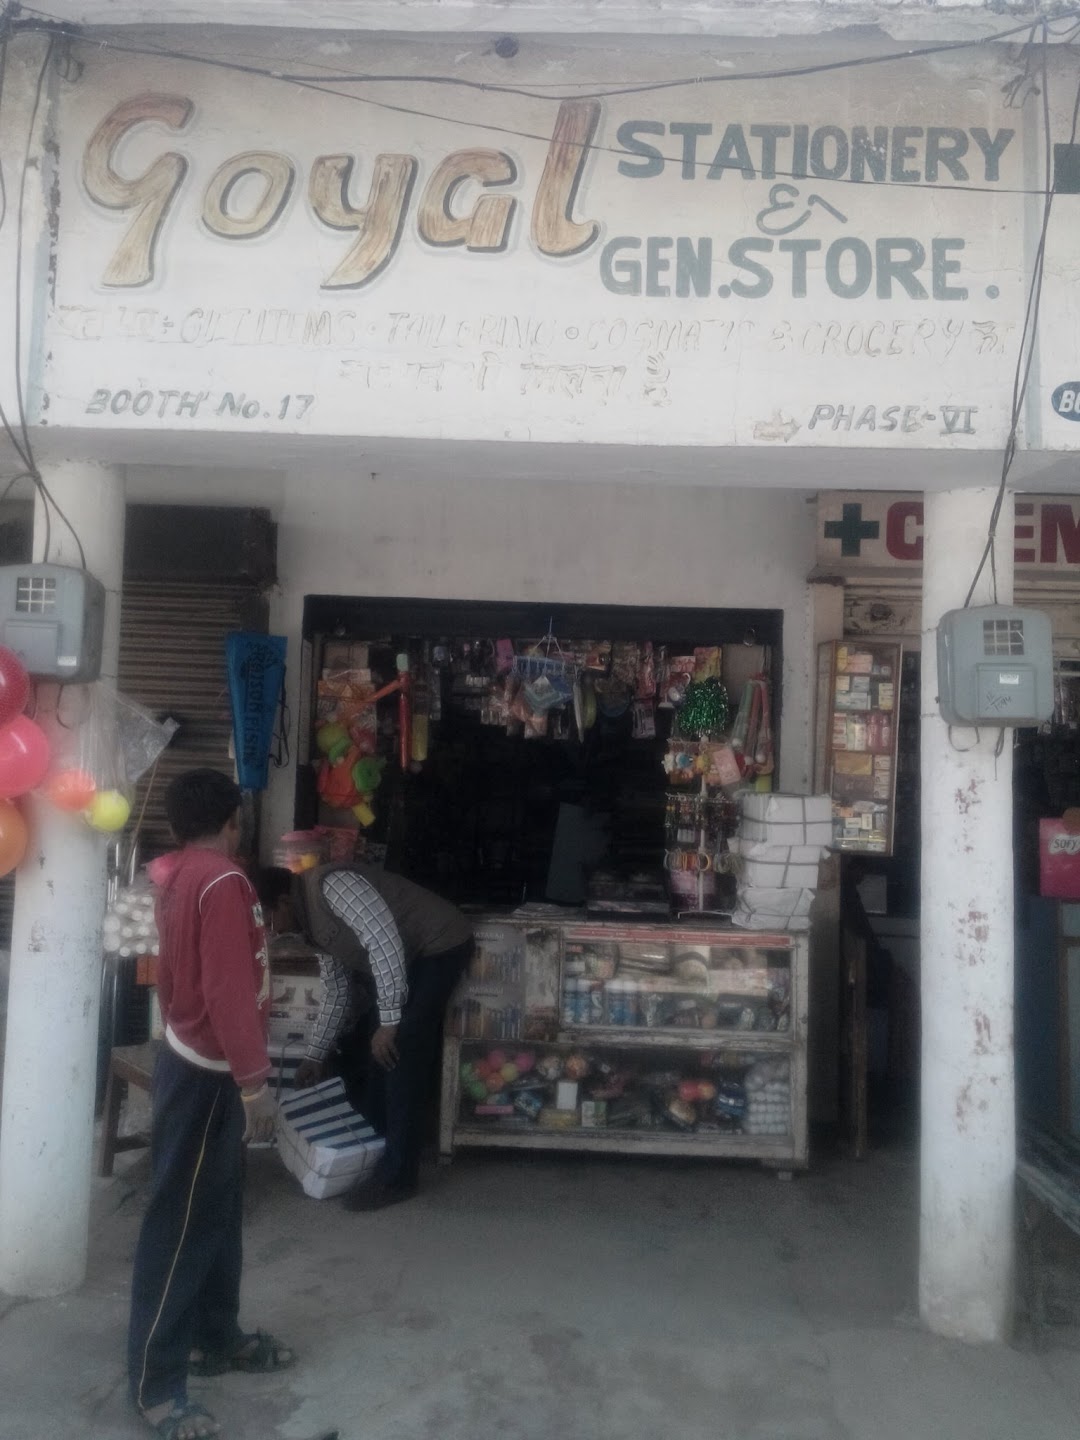 Goyal Stationery & General Store